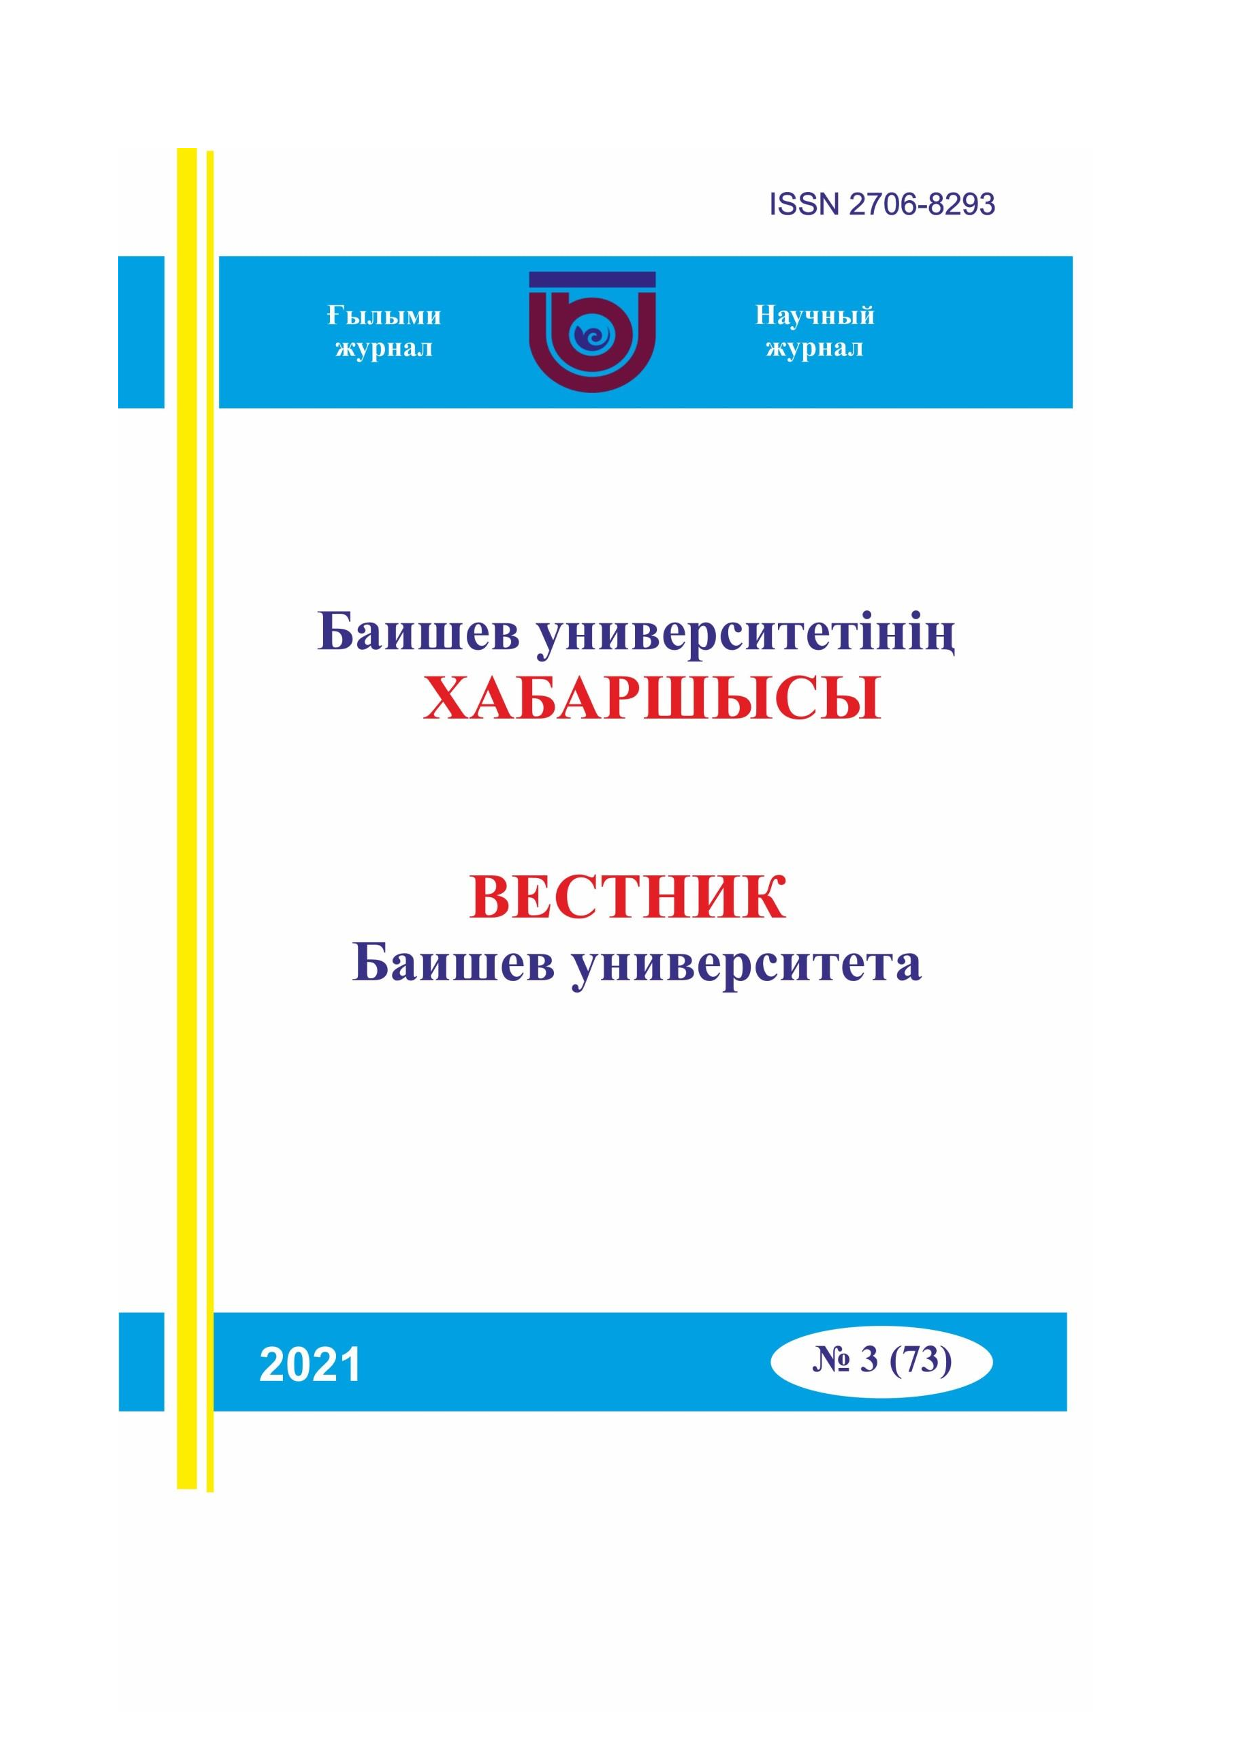 Вестник Баишев Университета №3(73) 2021г